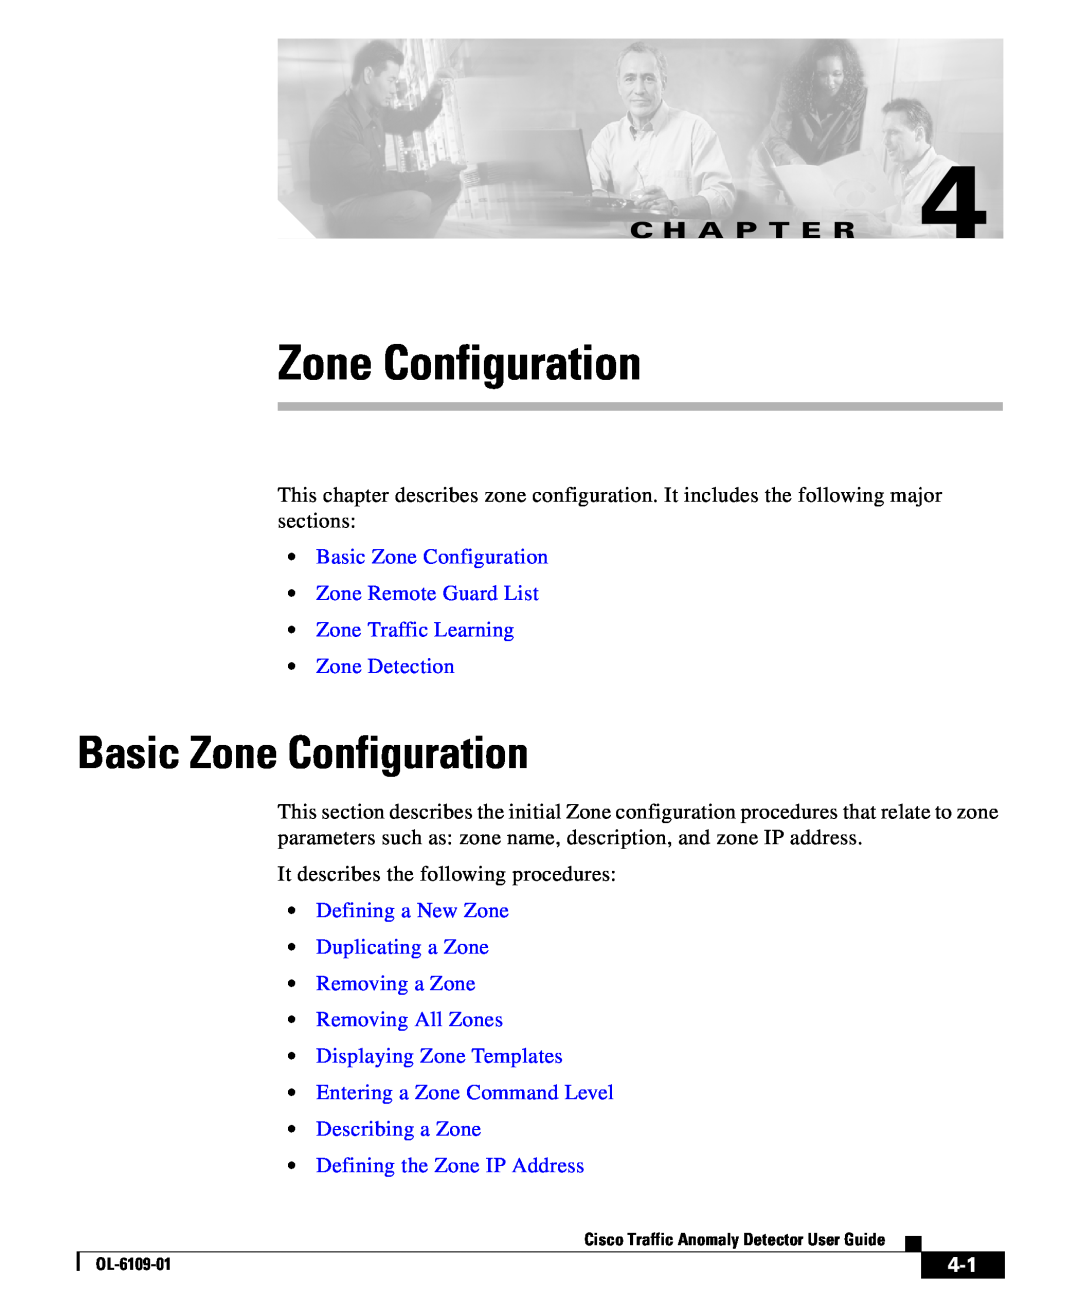 Cisco Systems OL-6109-01 manual Basic Zone Configuration, C H A P T E R 